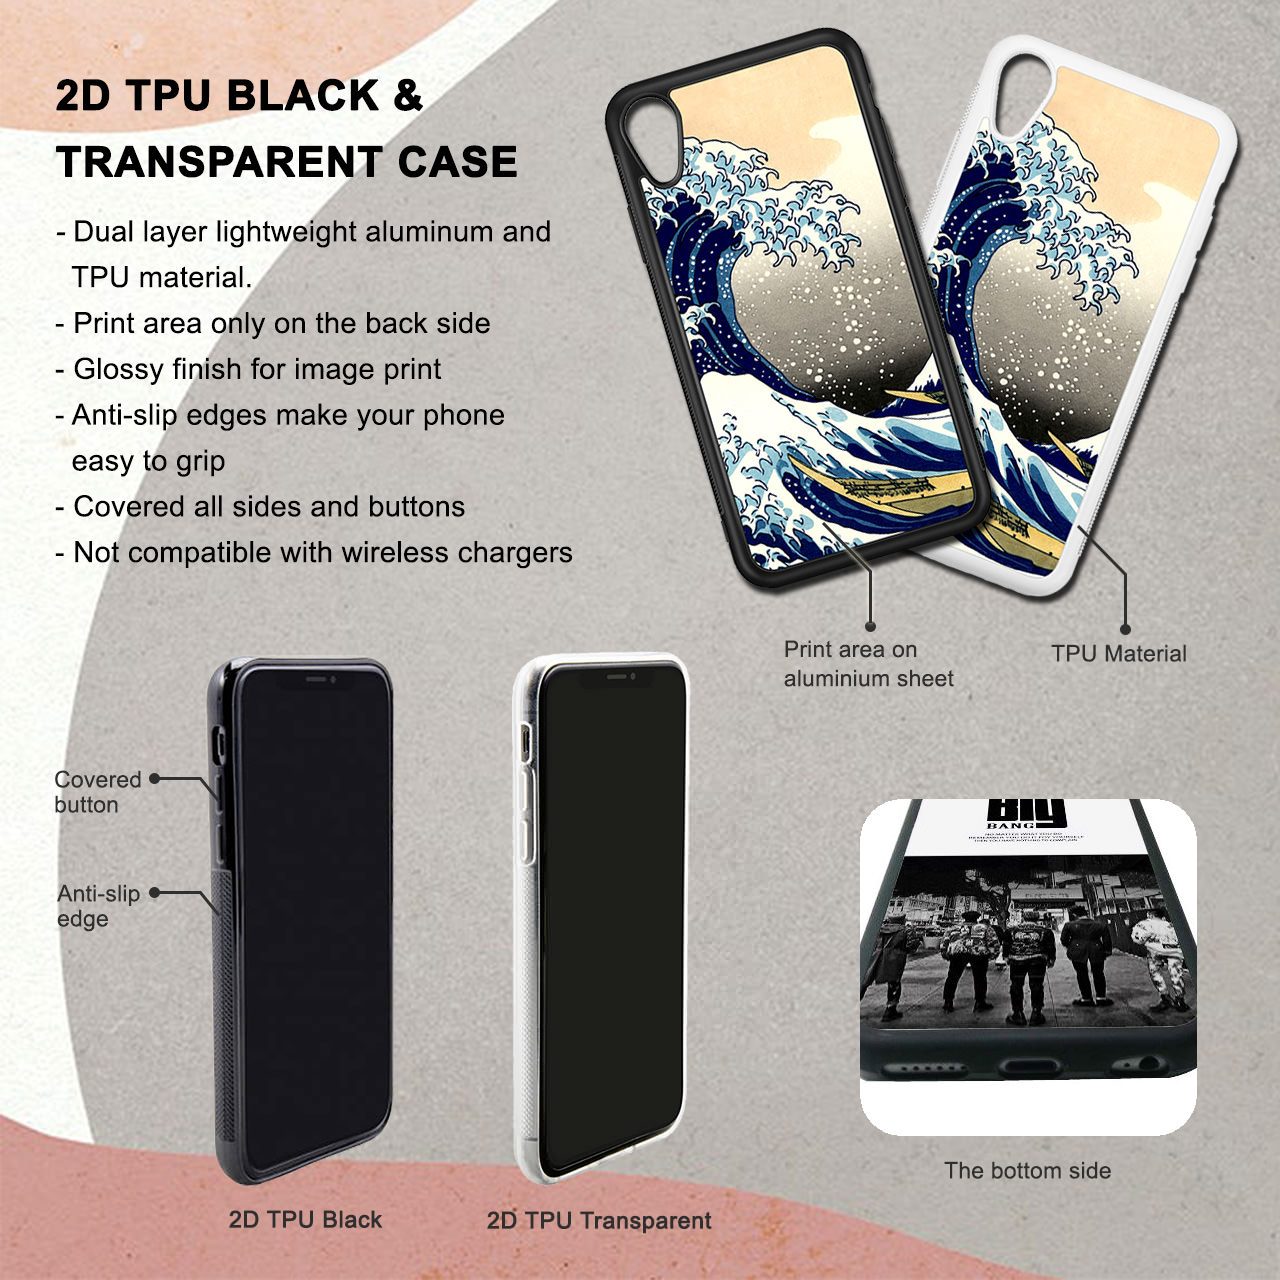 Black Snake Skin Texture iPhone 6 / 6s Plus Case